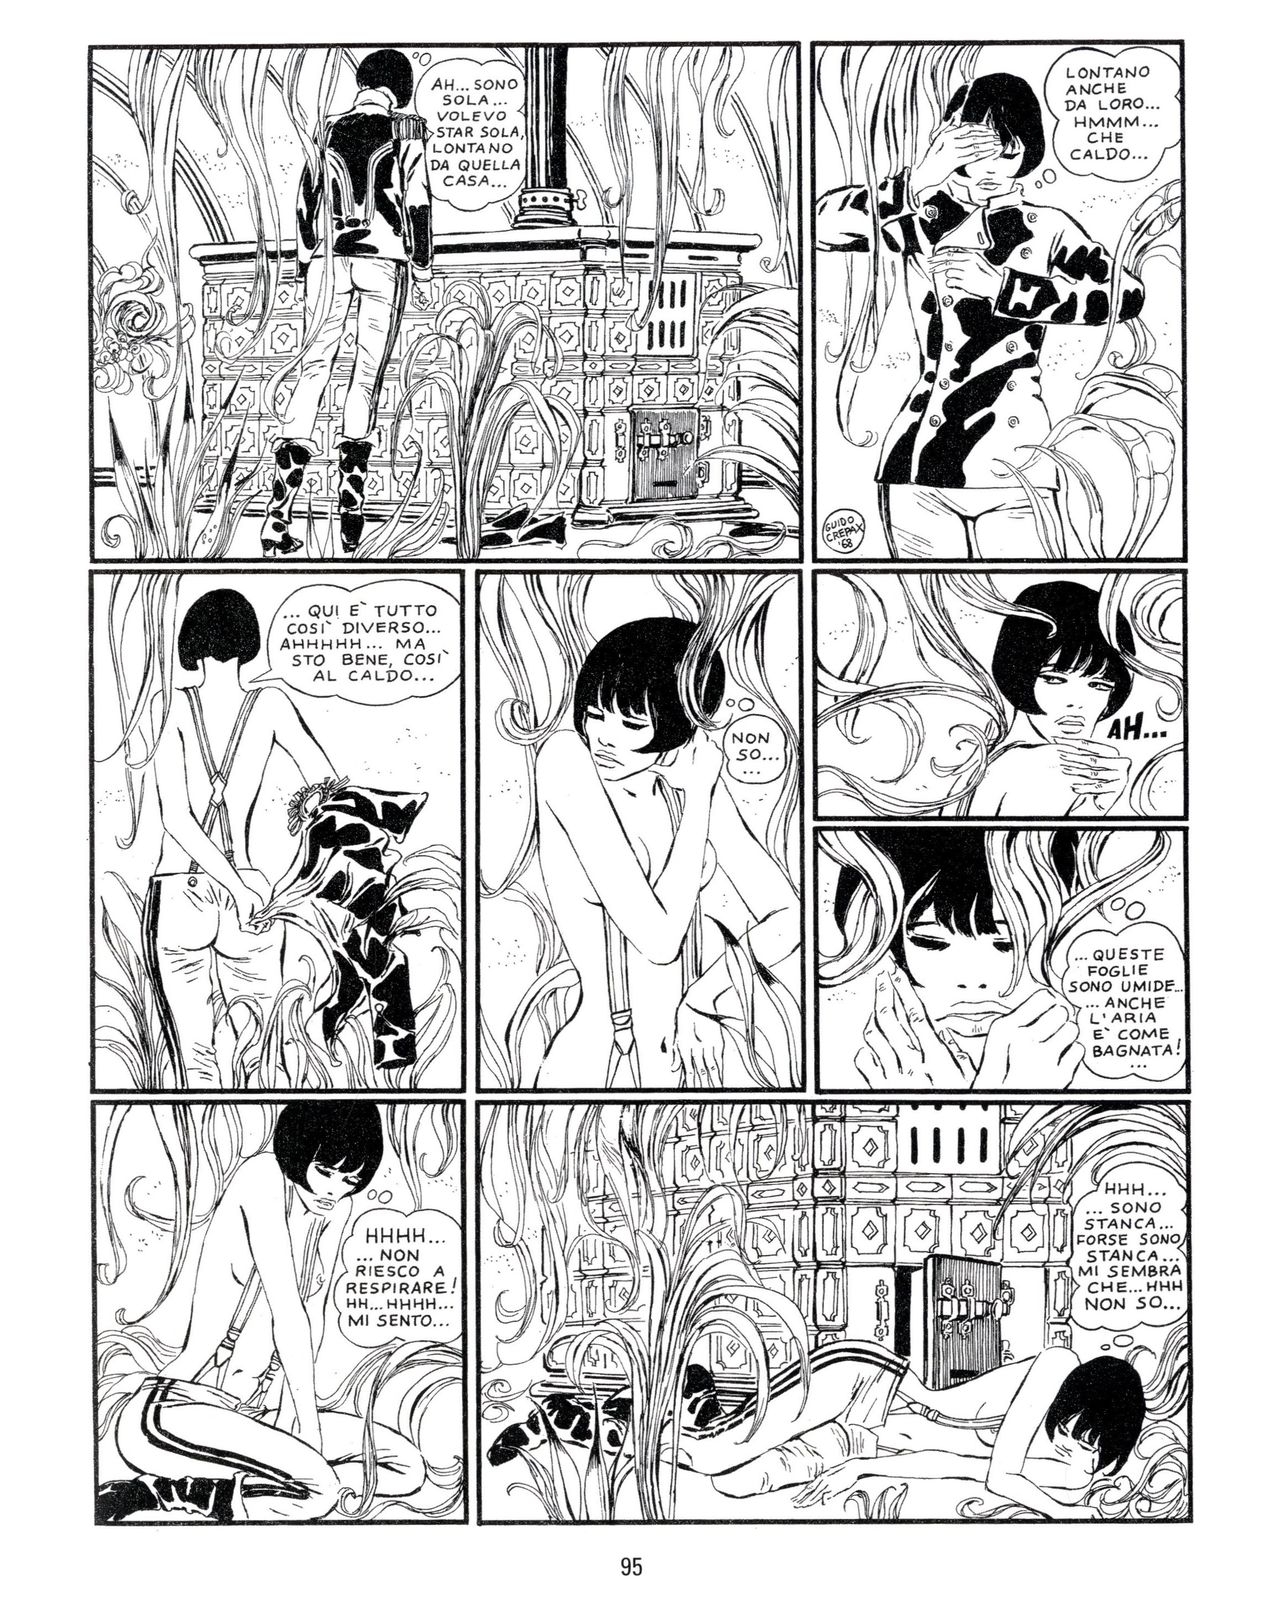 [Guido Crepax] Erotica Fumetti #25 : L'ascesa dei sotterranei : I cavalieri ciechi [Italian] 96